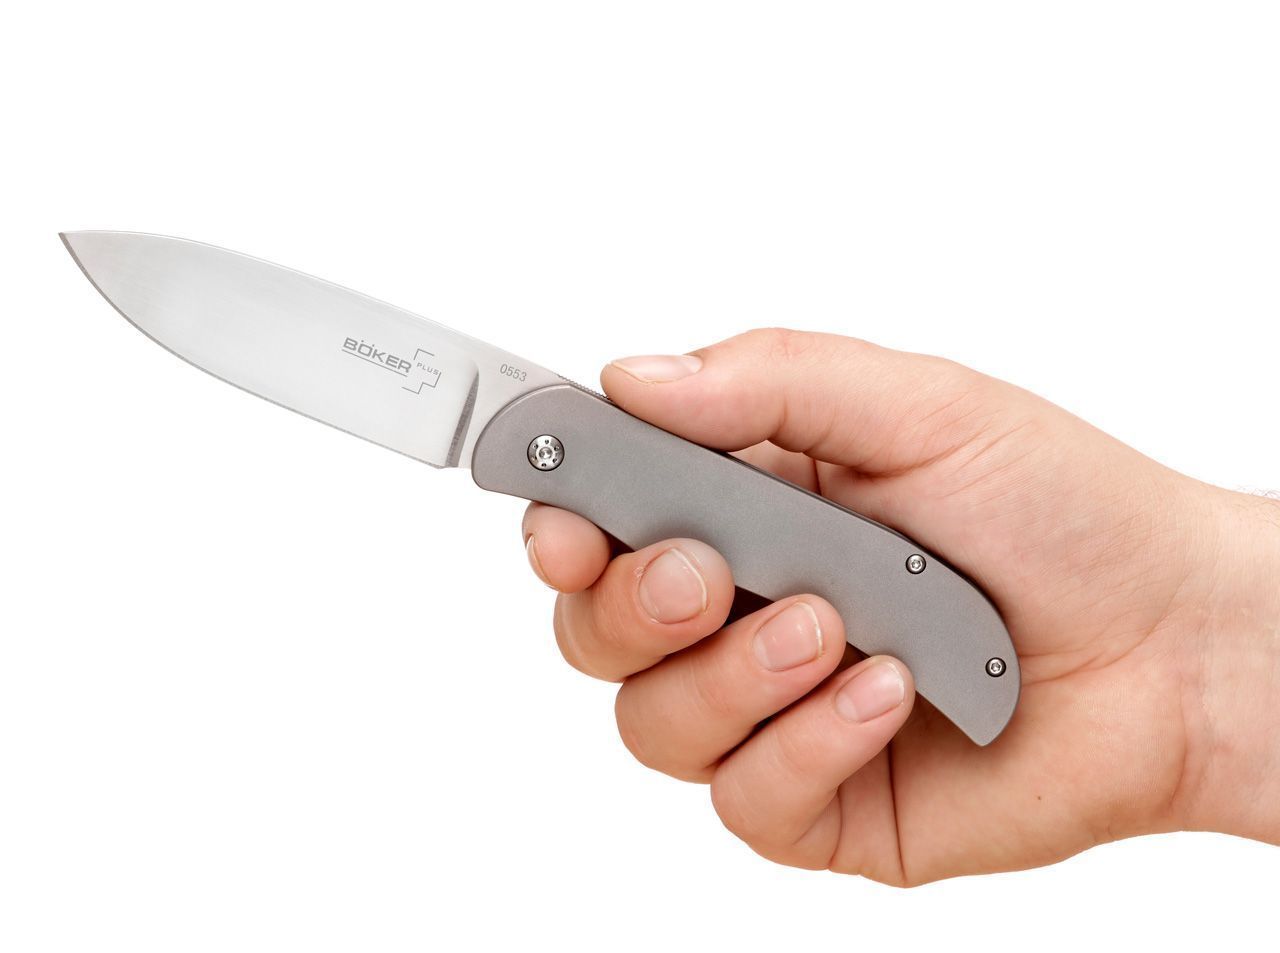 фото Складной нож exskelibur 1 titanium, boker plus 01bo133, сталь cpm-s35vn satin plain, рукоять титан, серый